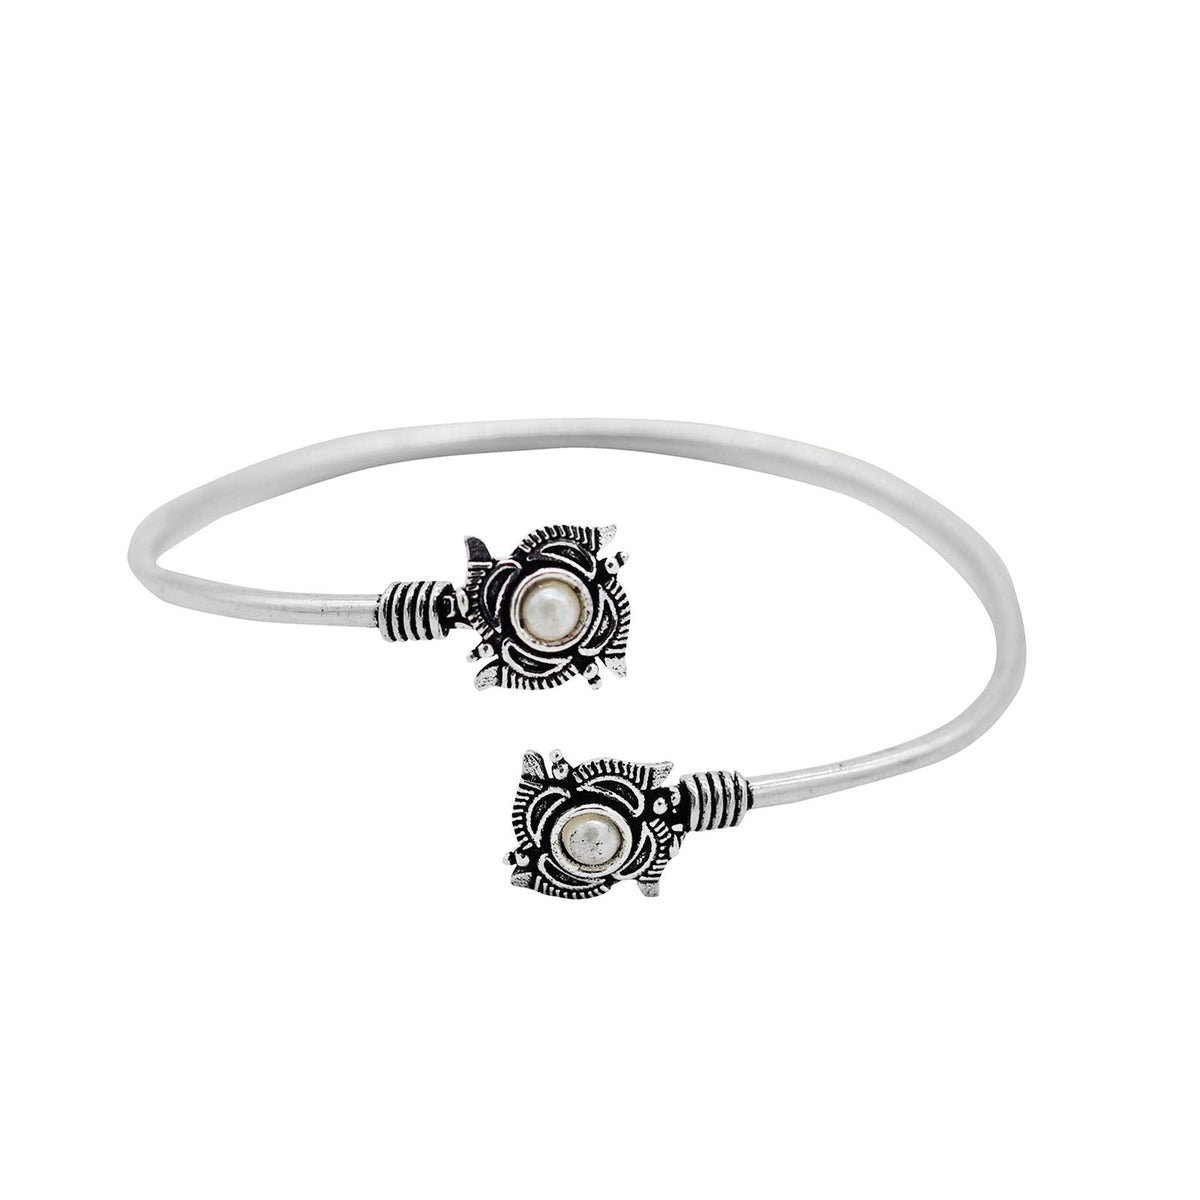 TEEJH Aparna White Flower Silver Oxidized Bracelet for Women